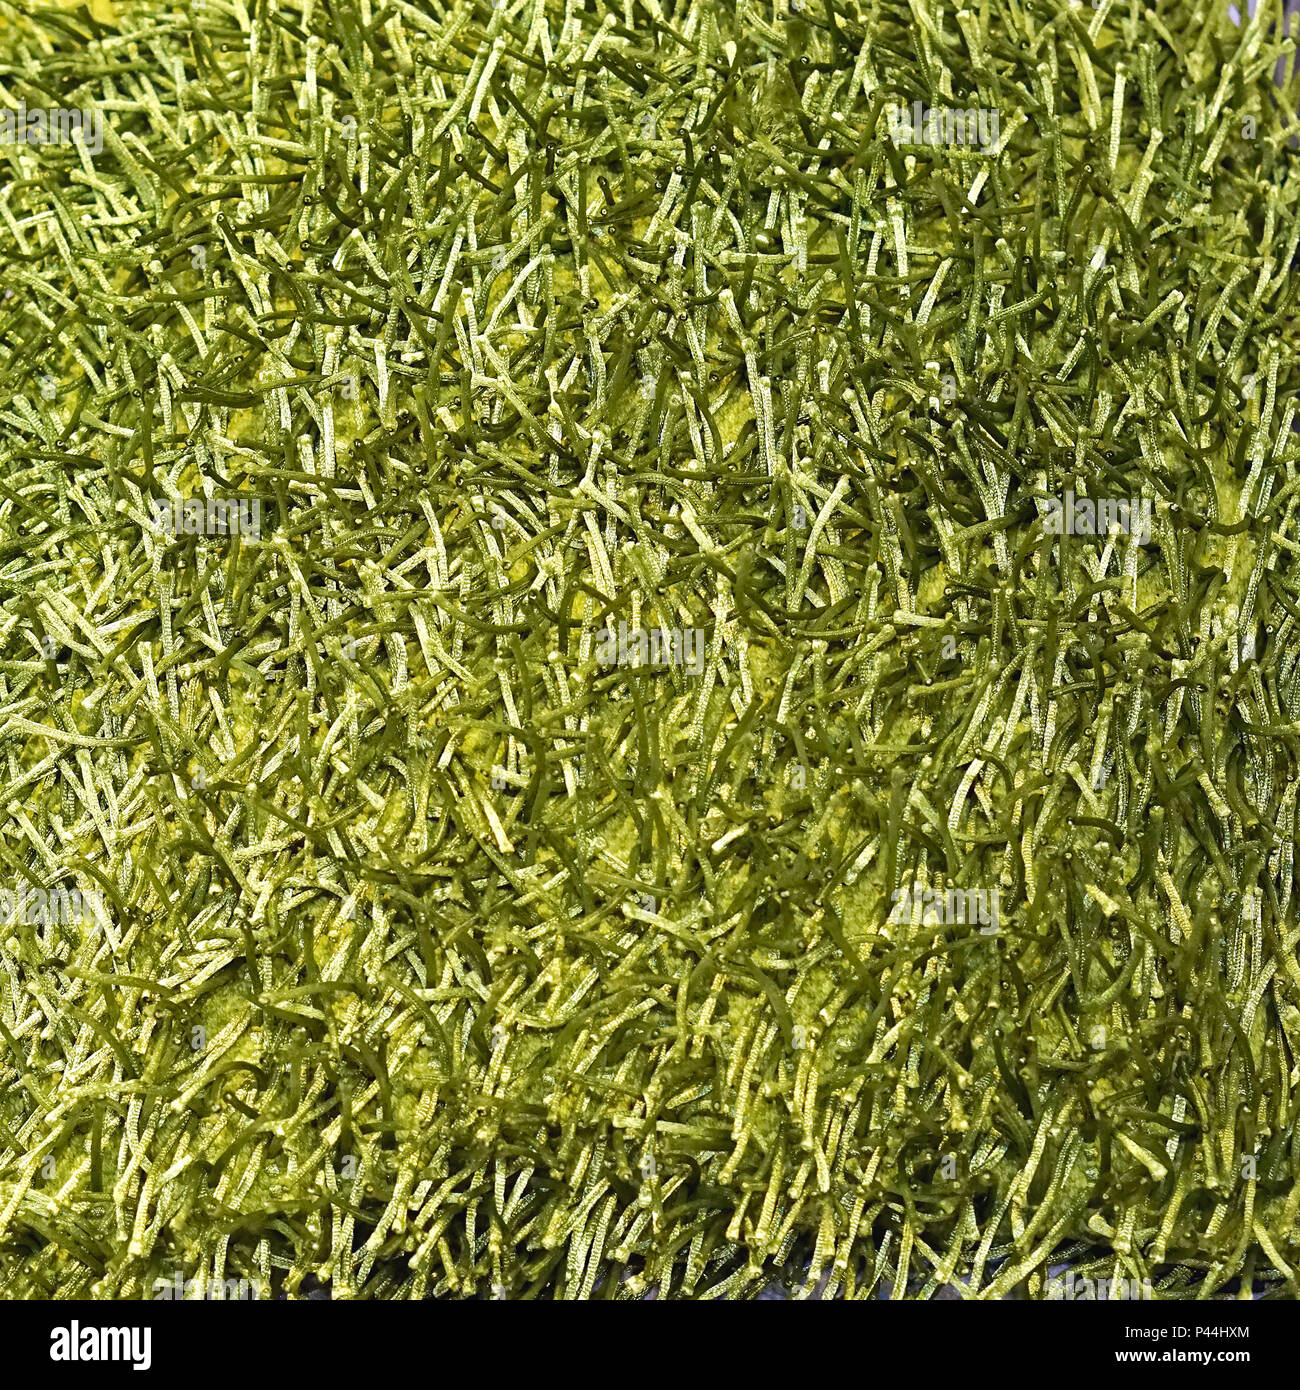 La Textura De La Alfombra Es Verde Fondo De La Alfombra Verde Imagen de  archivo - Imagen de material, alfombra: 130535355